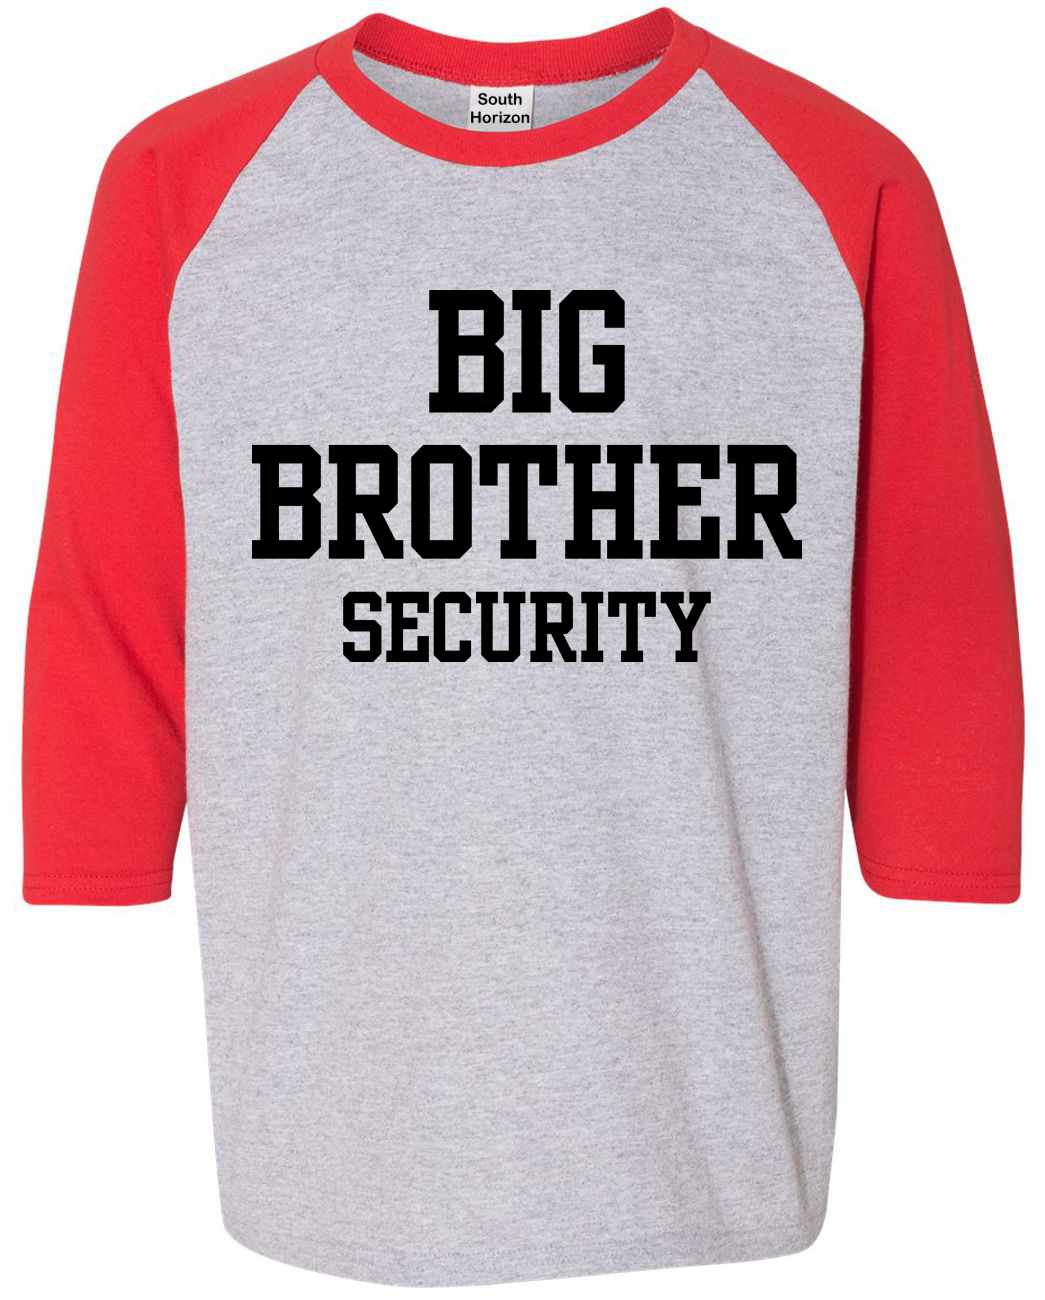 Big Brother Security on Youth Baseball Shirt (#1136-212)